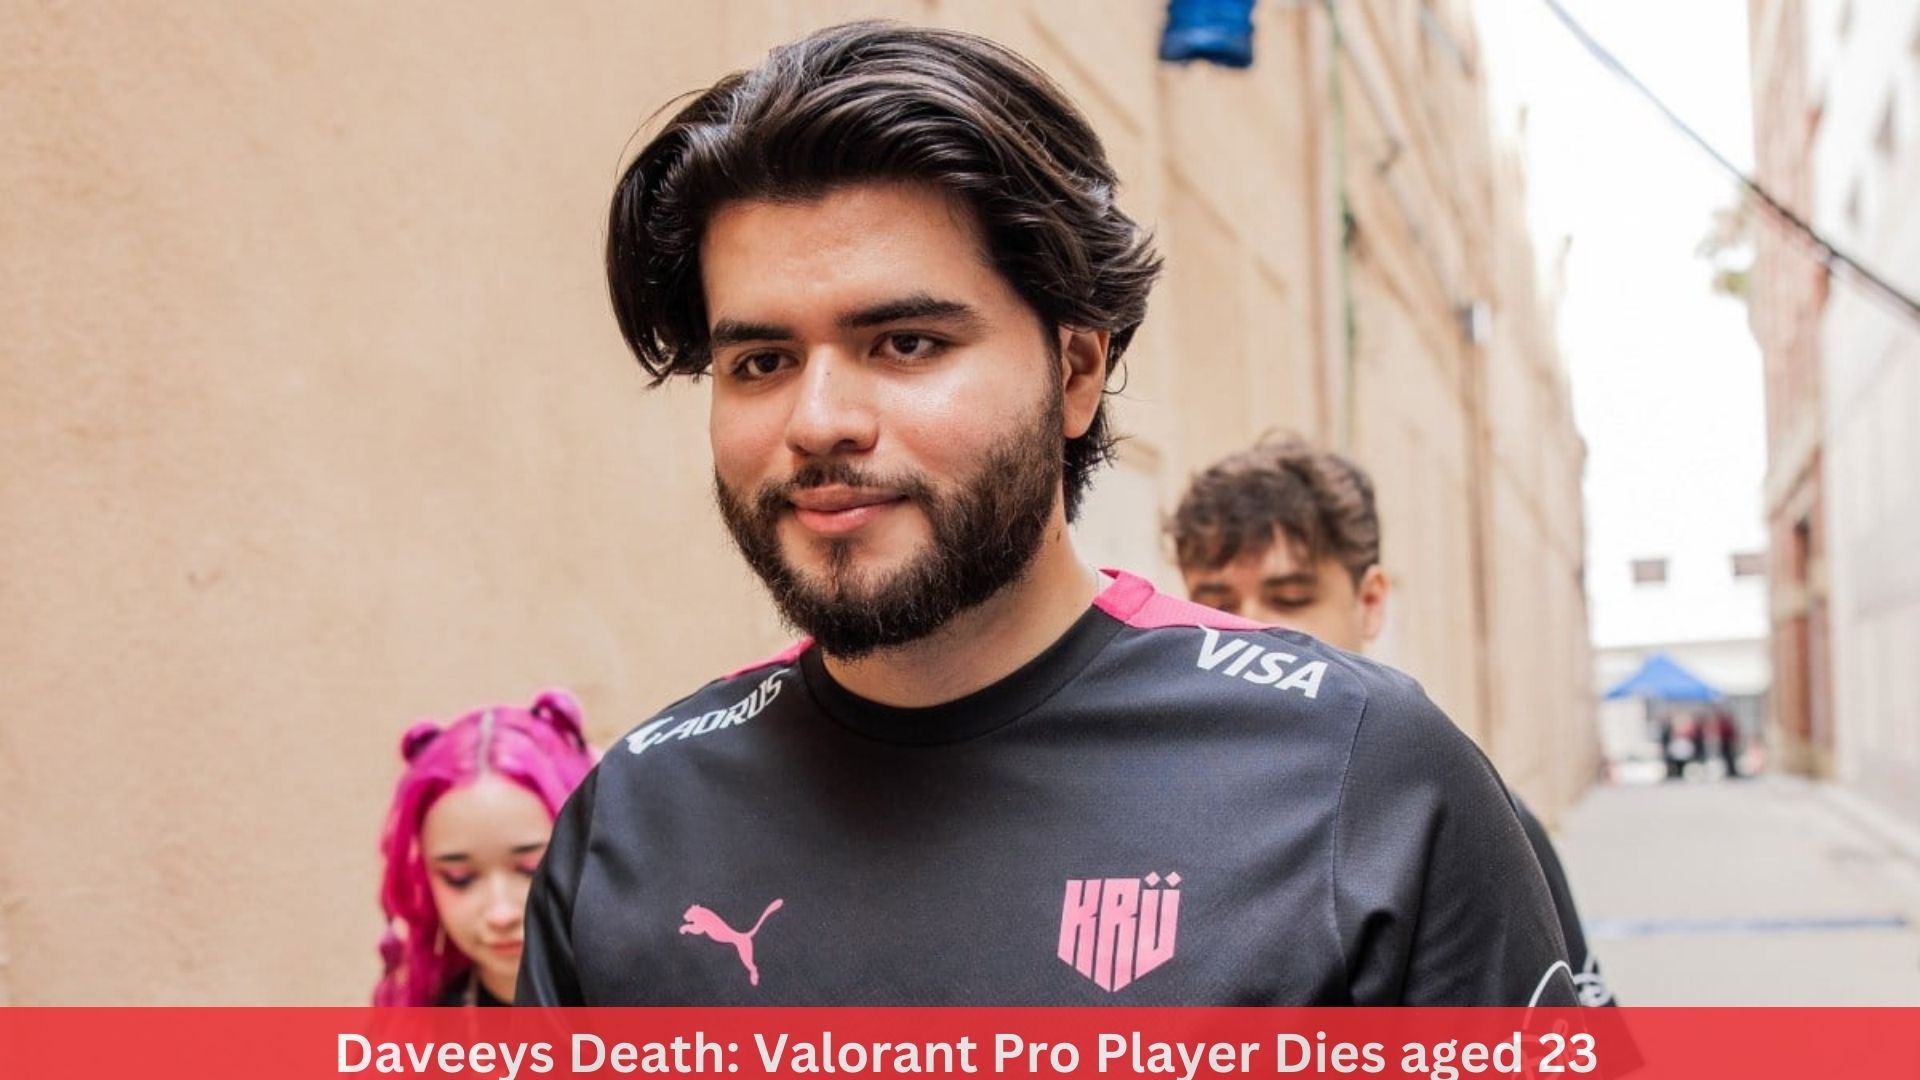 Daveeys Death: Valorant Pro Player Dies aged 23